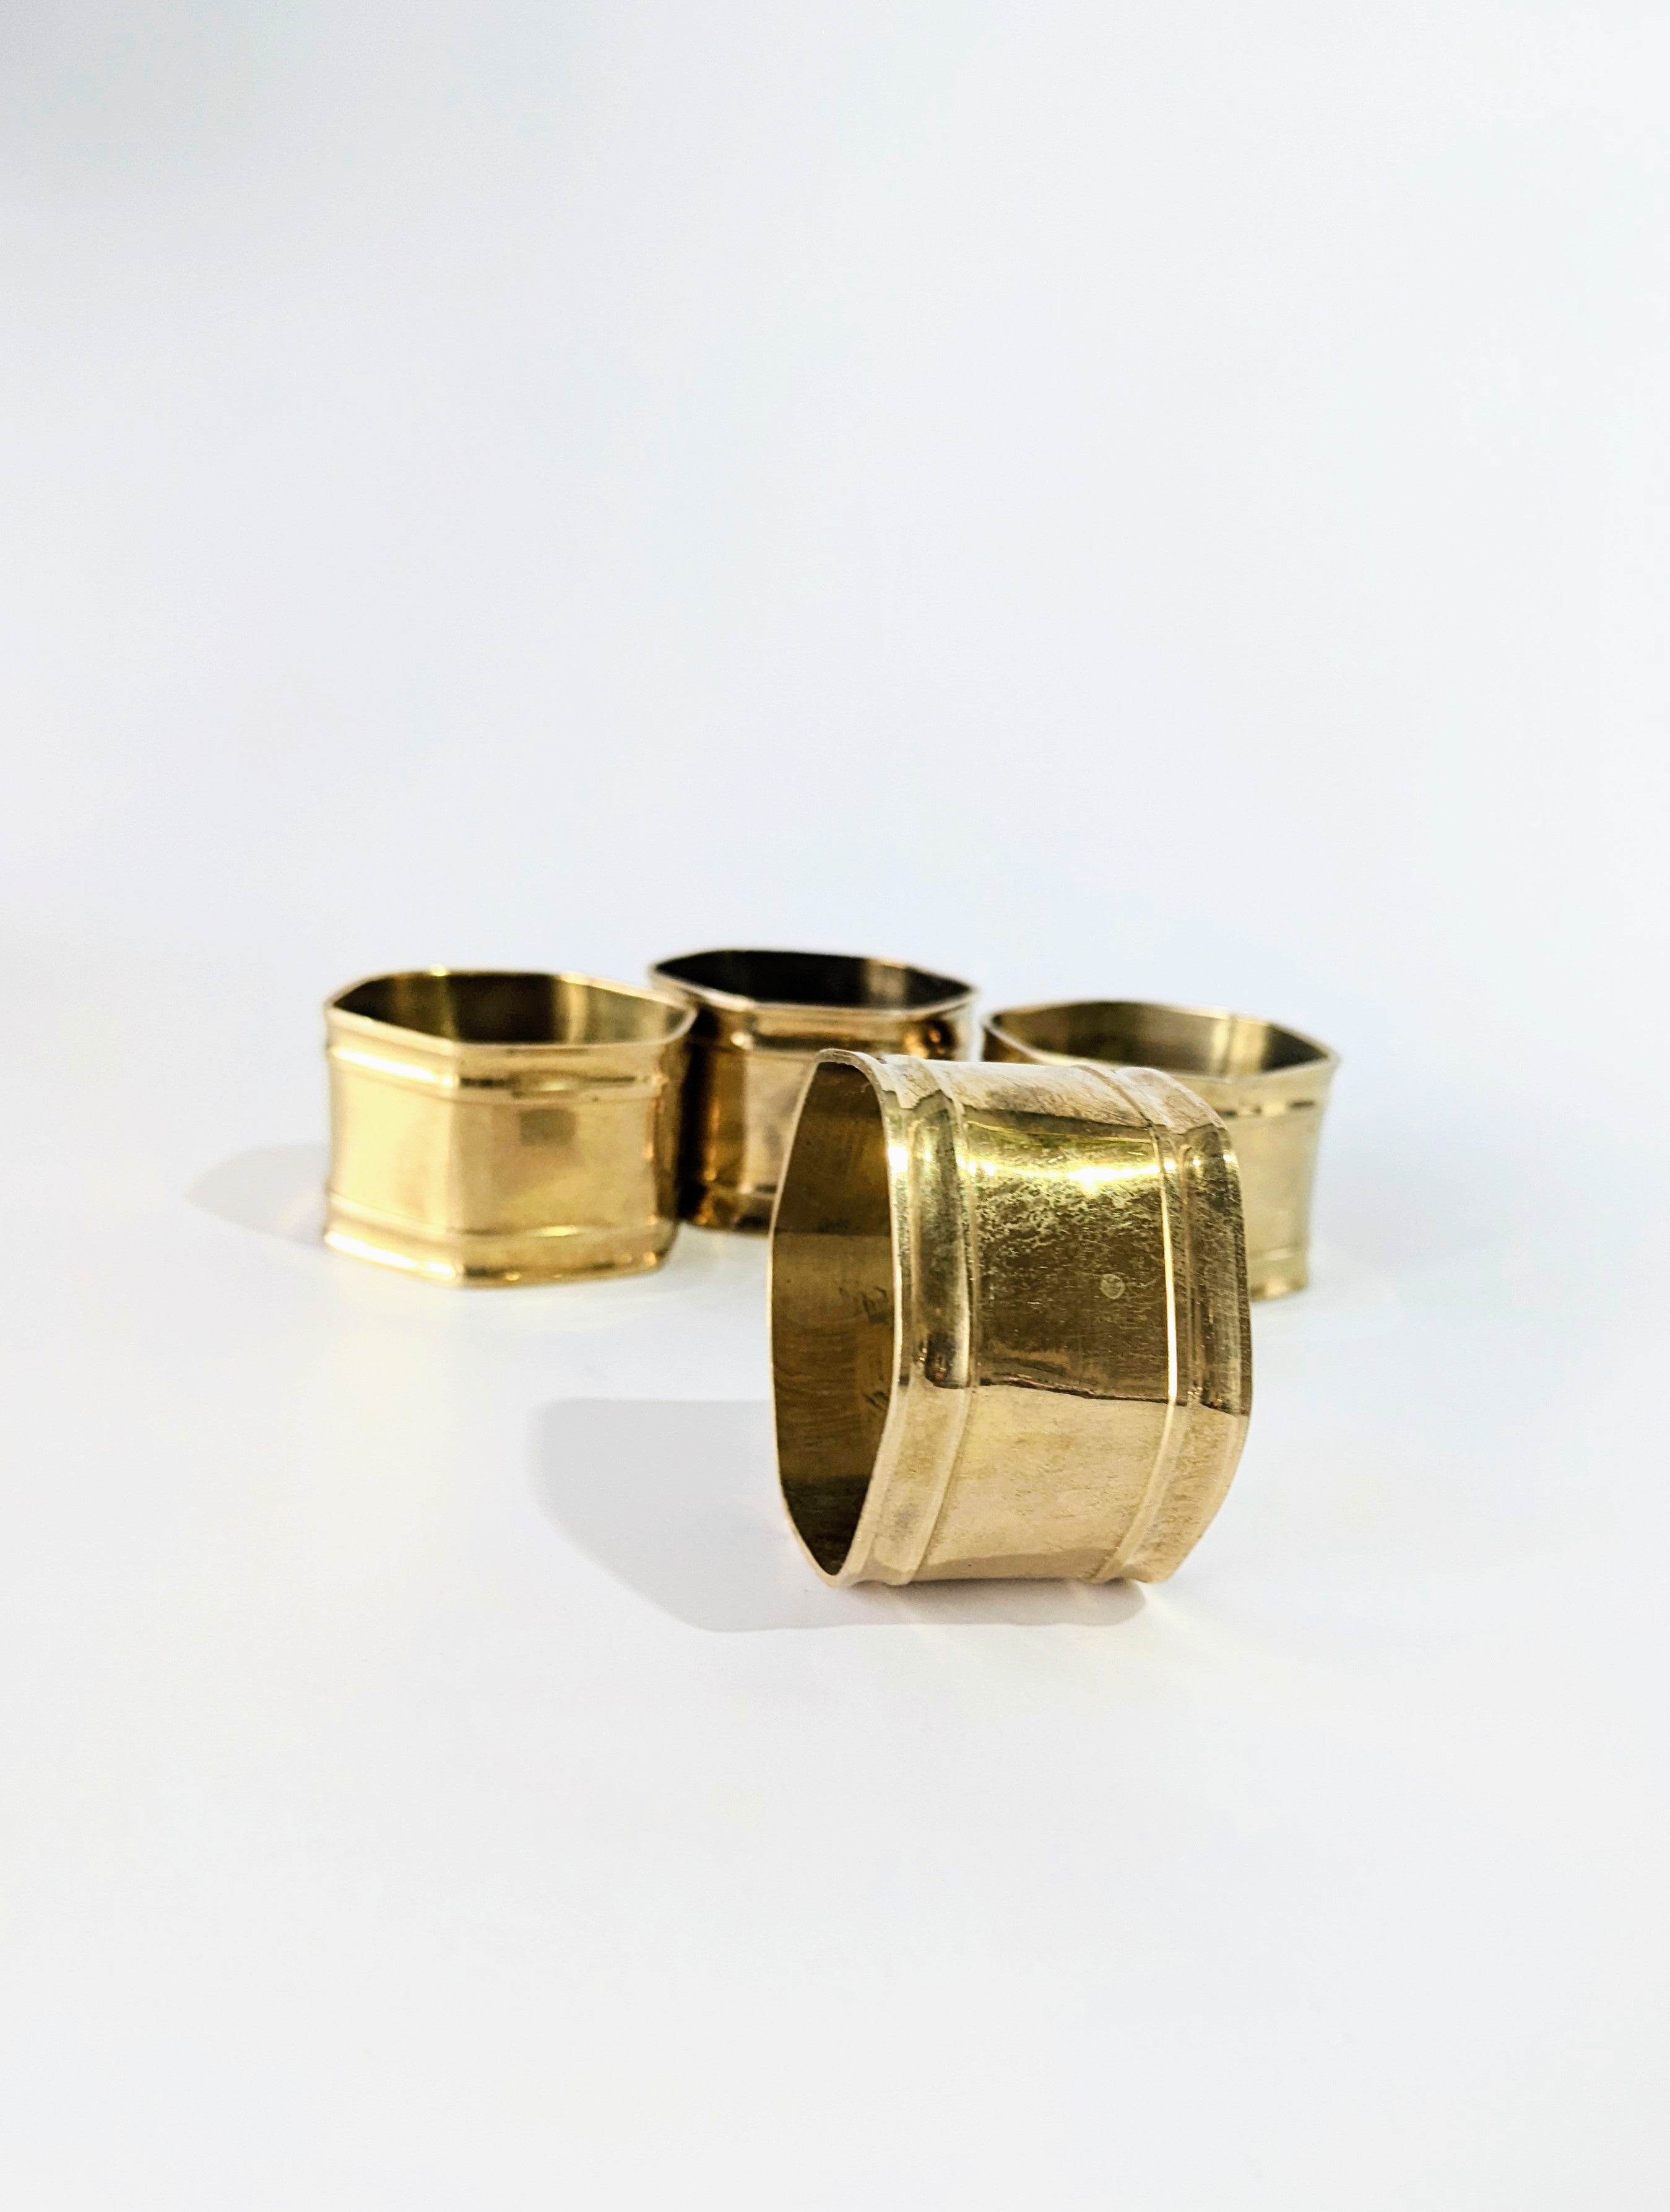 VIntage Brass Napkin Rings